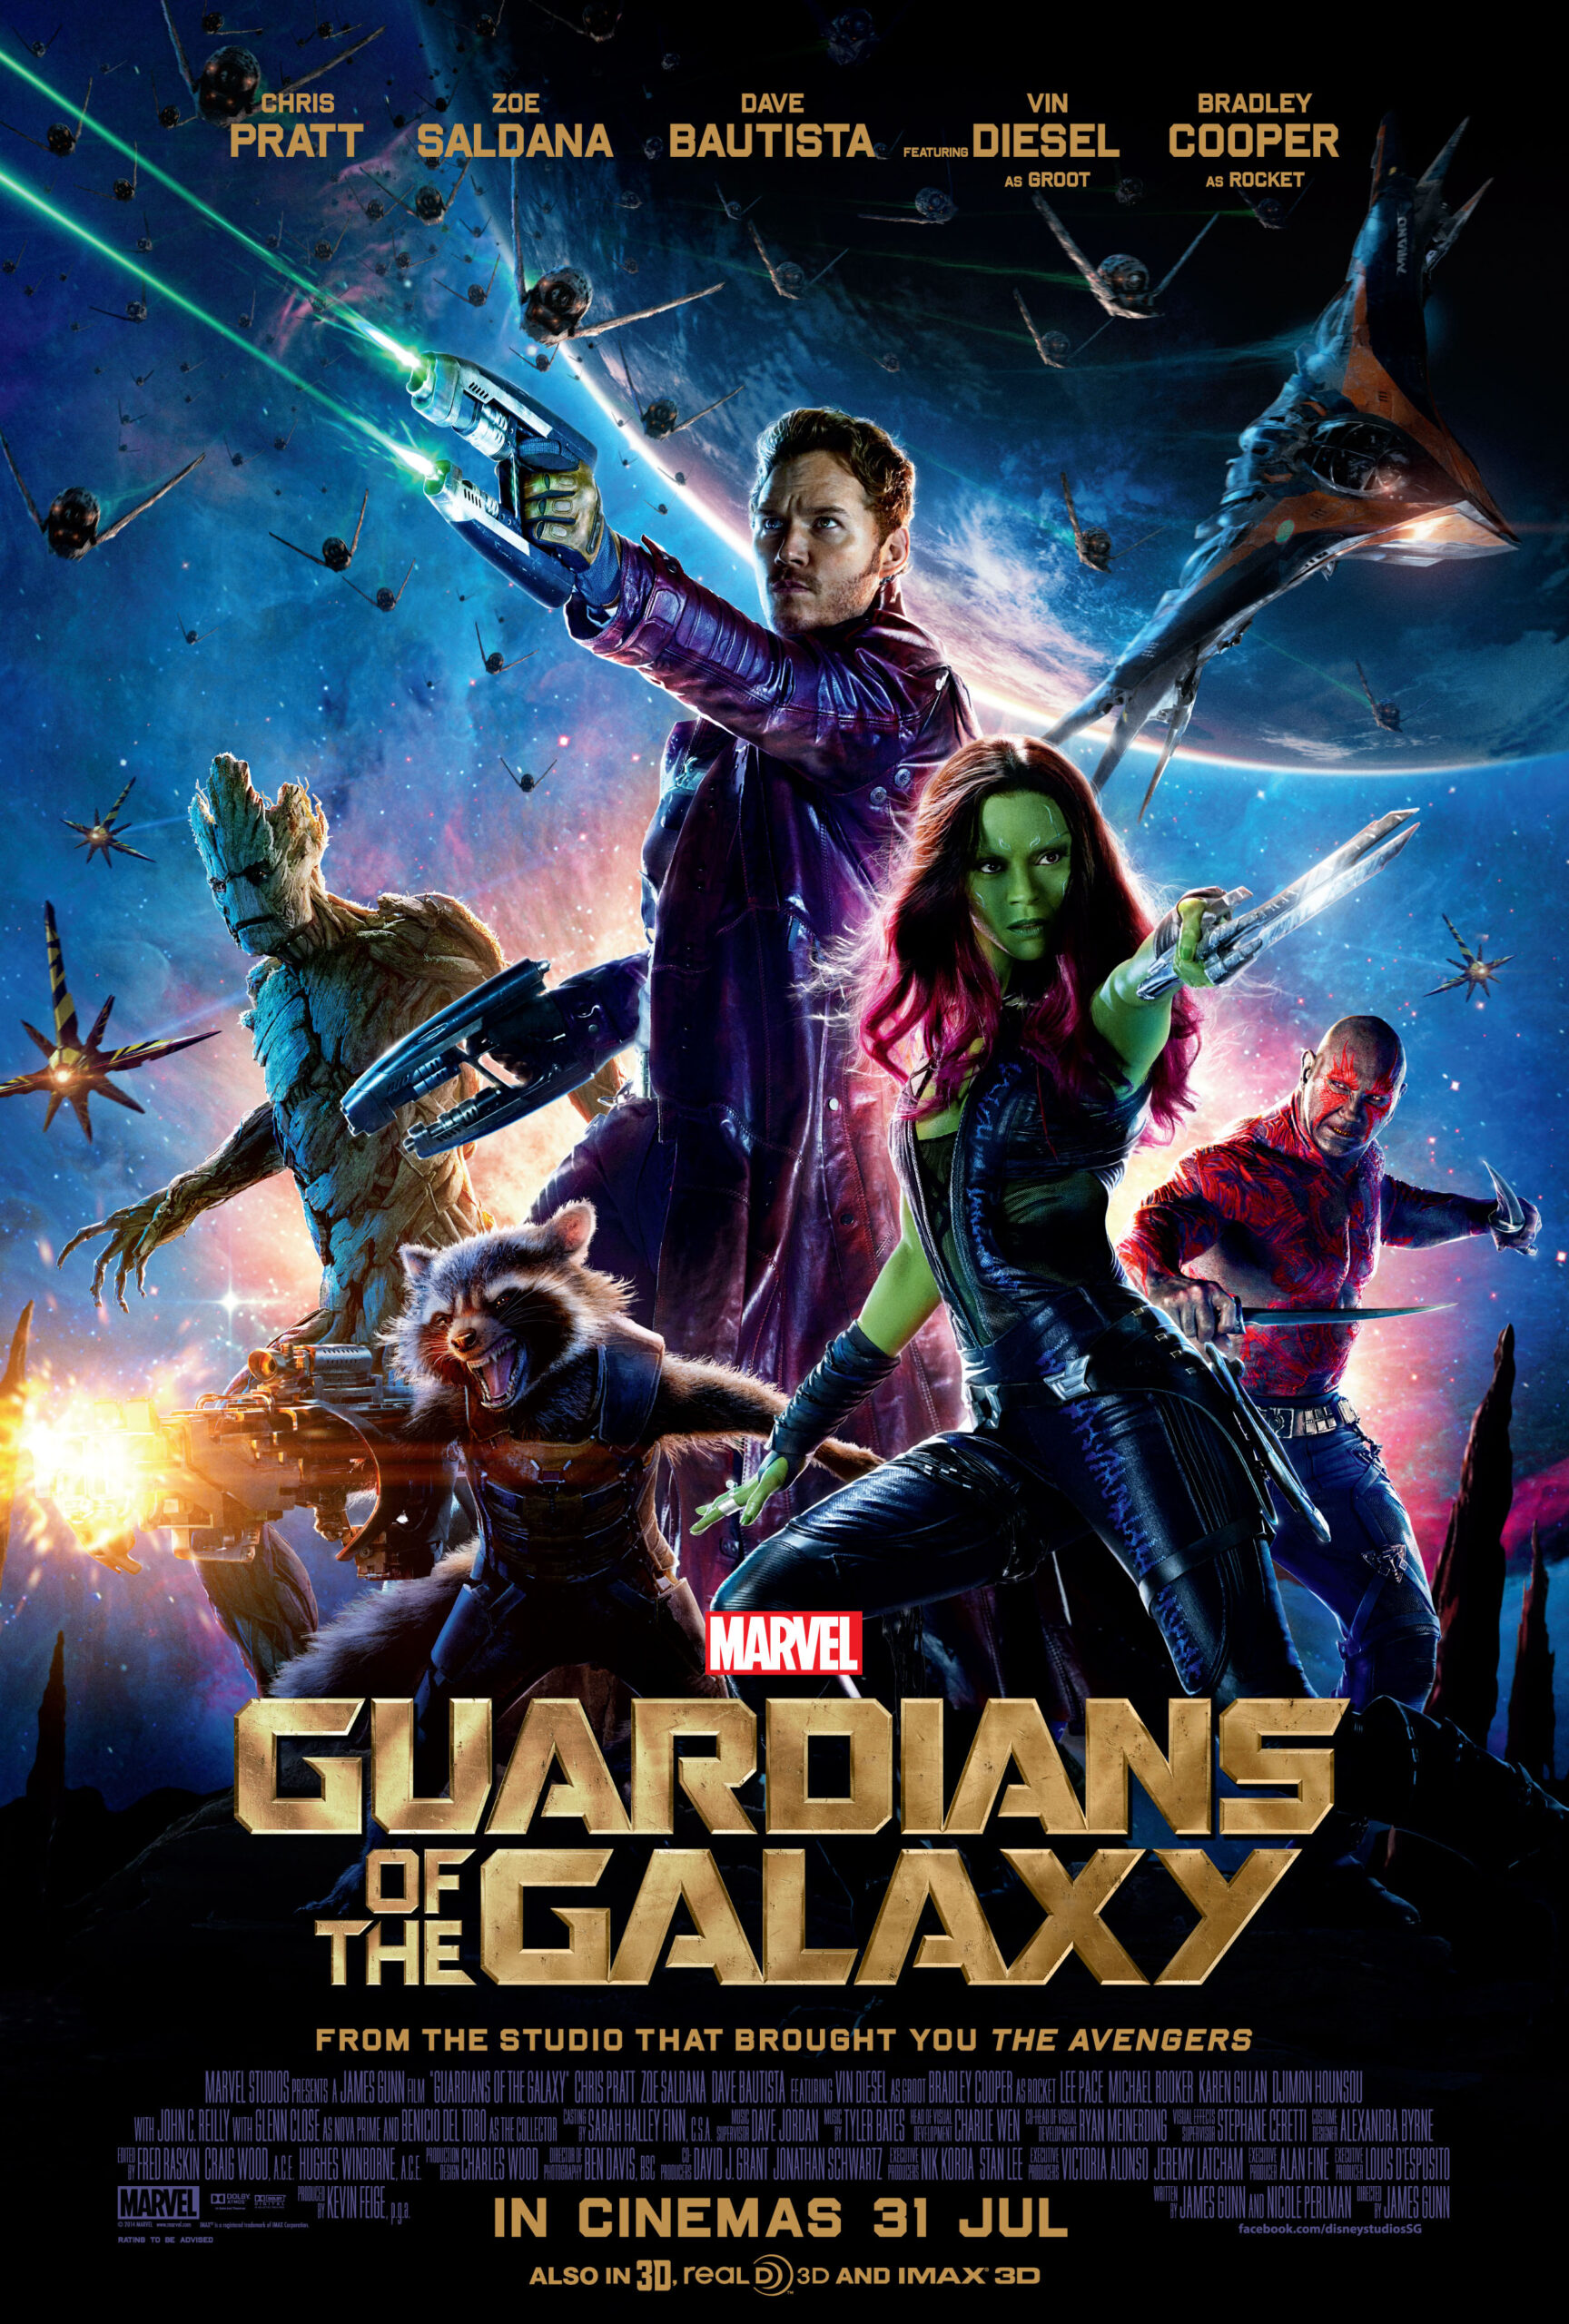 Vin Diesel, Bradley Cooper, Chris Pratt, Zoe Saldana, and Dave Bautista in Guardians of the Galaxy (2014)